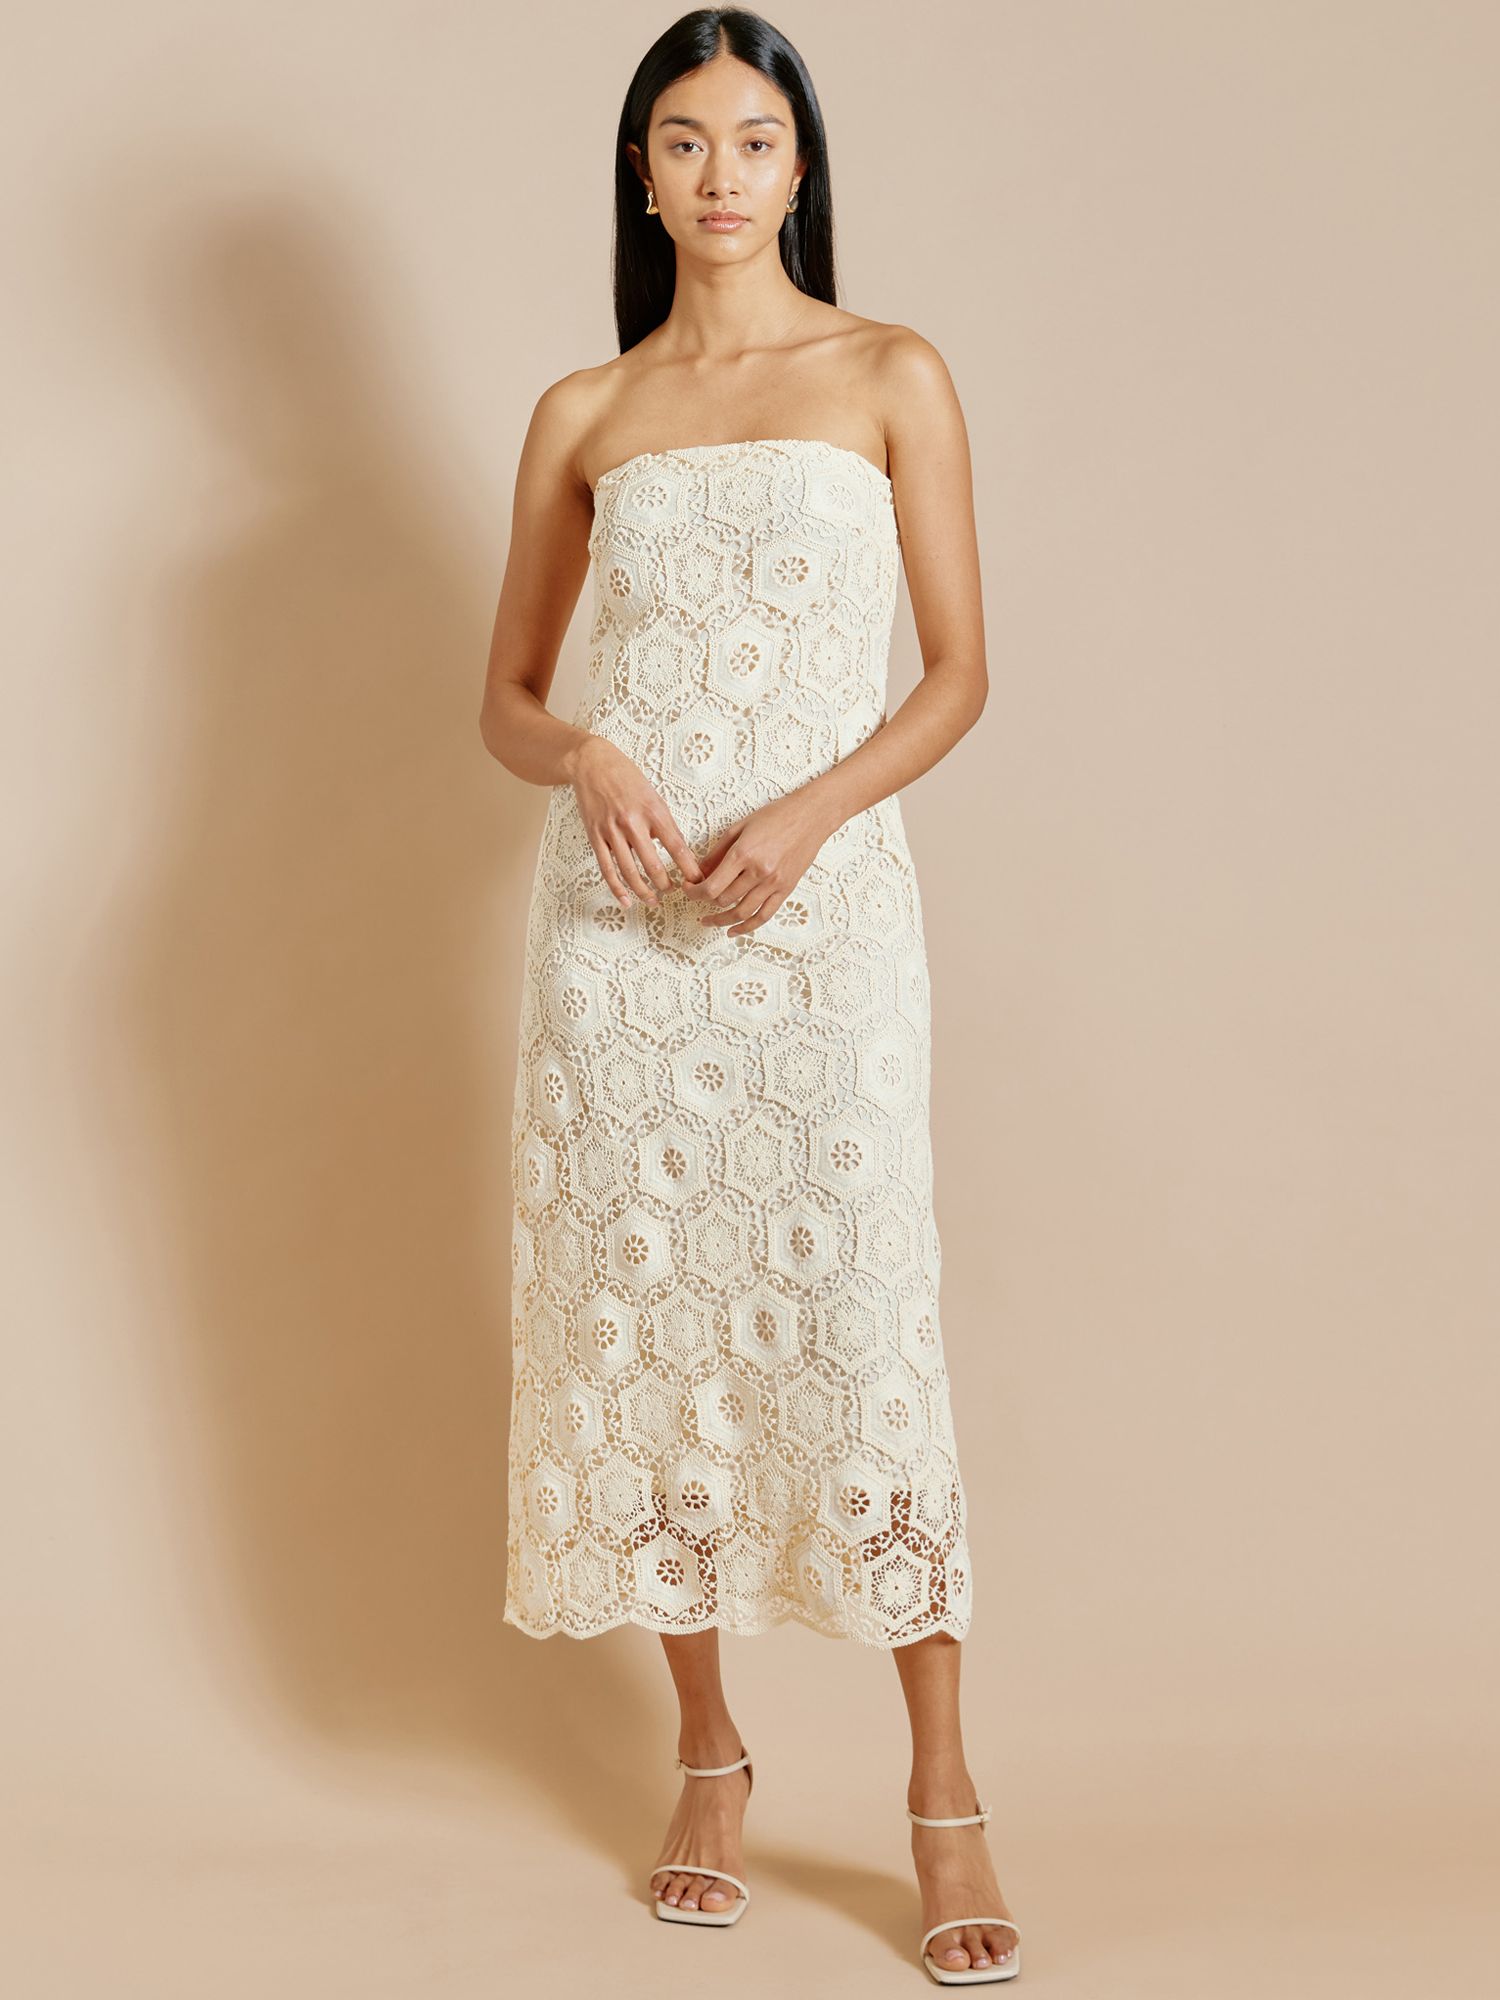 Albaray Bandeau Crochet Dress, Cream, 14